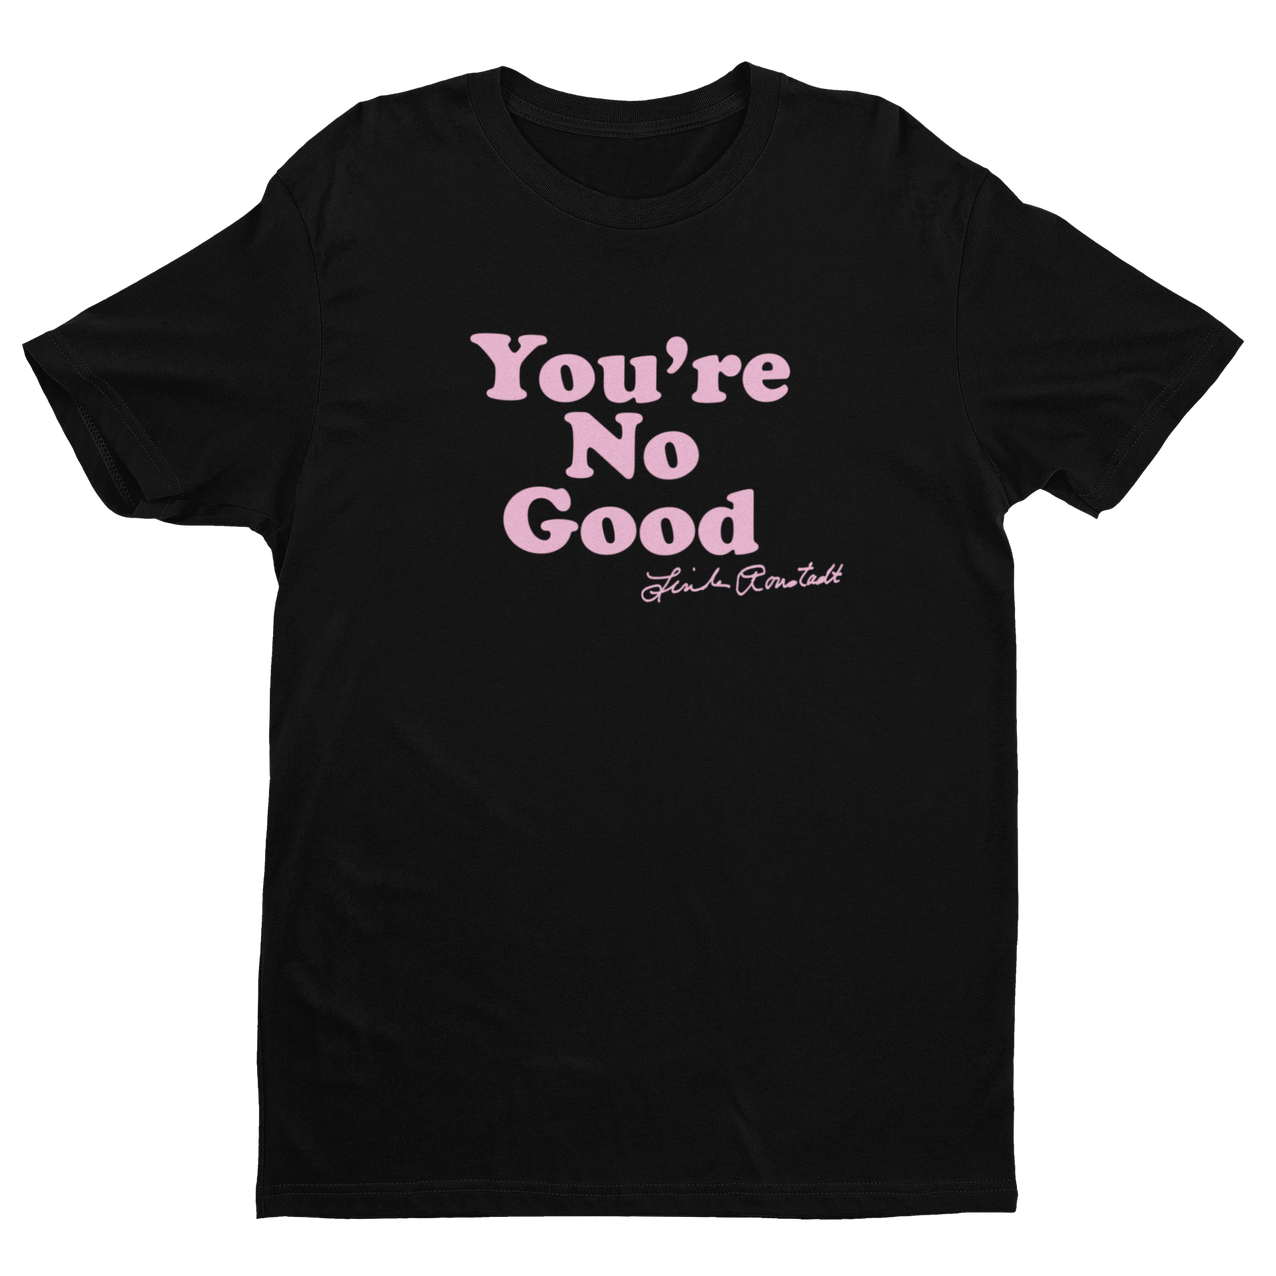 "You're No Good" Tee - Black/ Pink